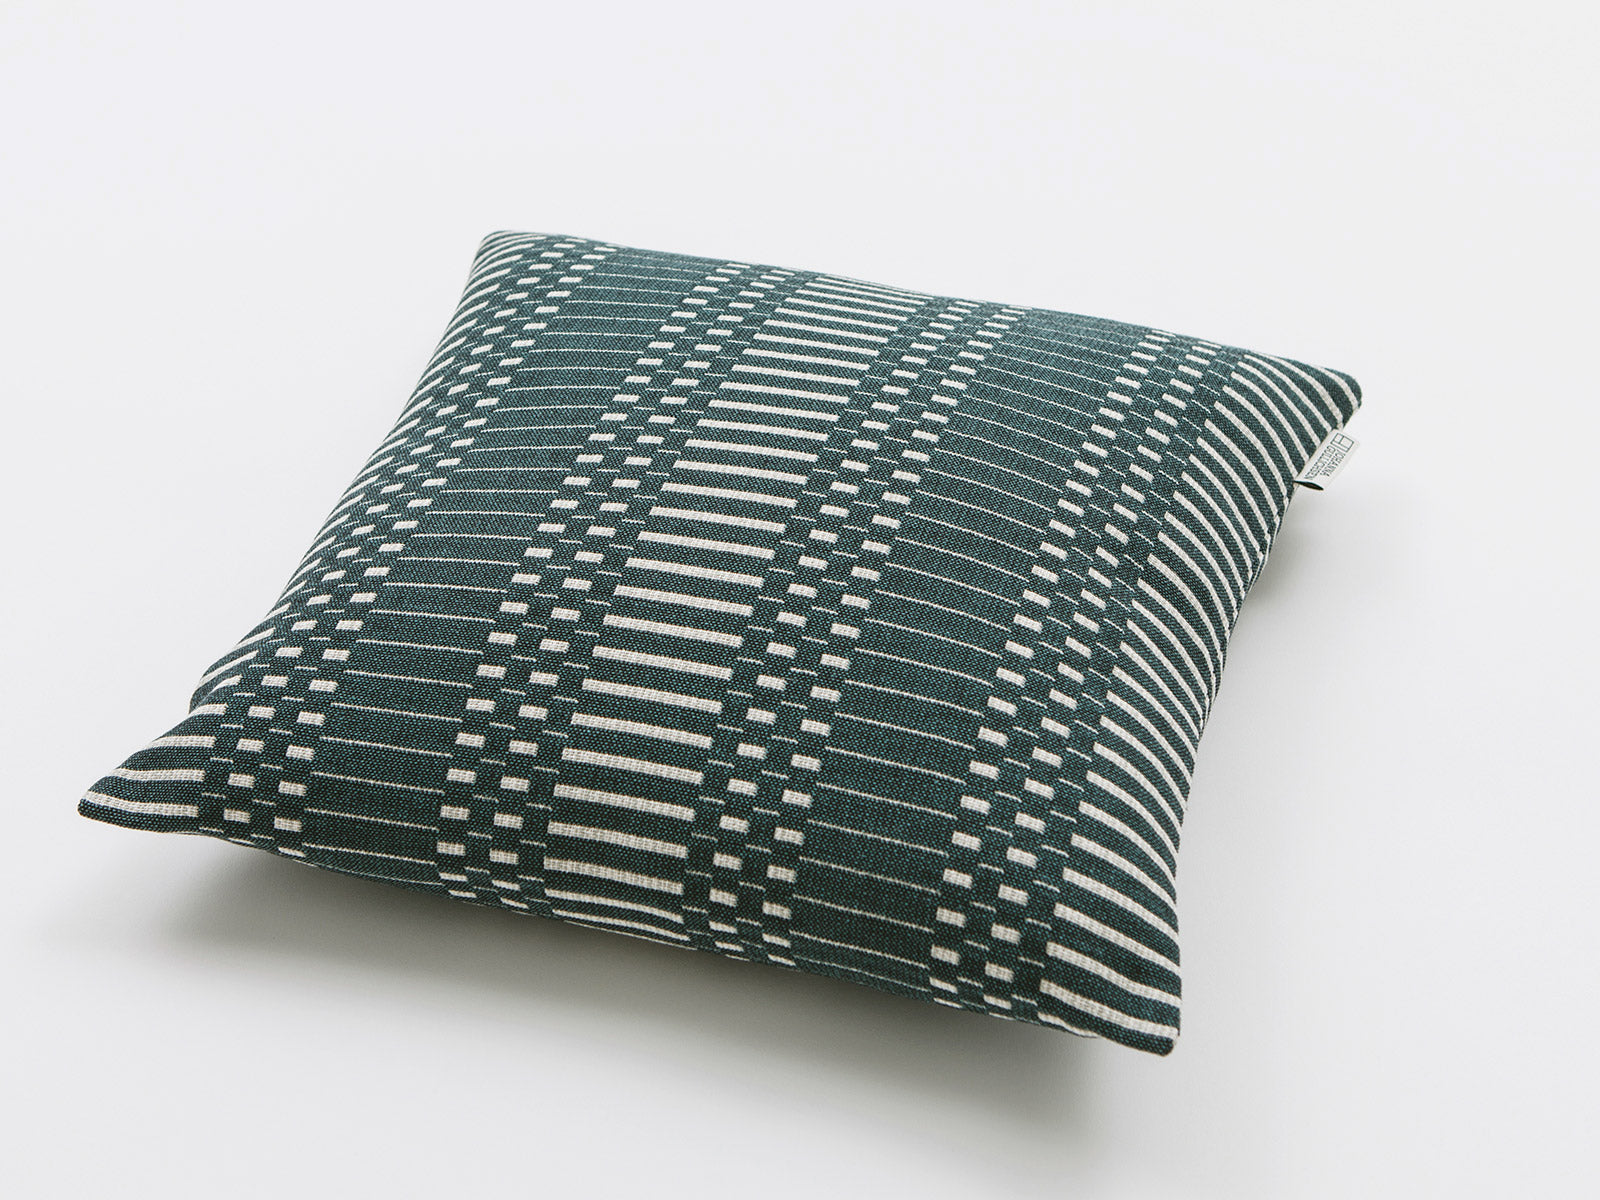 Cushion pillow 40x40 cm (cover only) -Helios, Dark Green